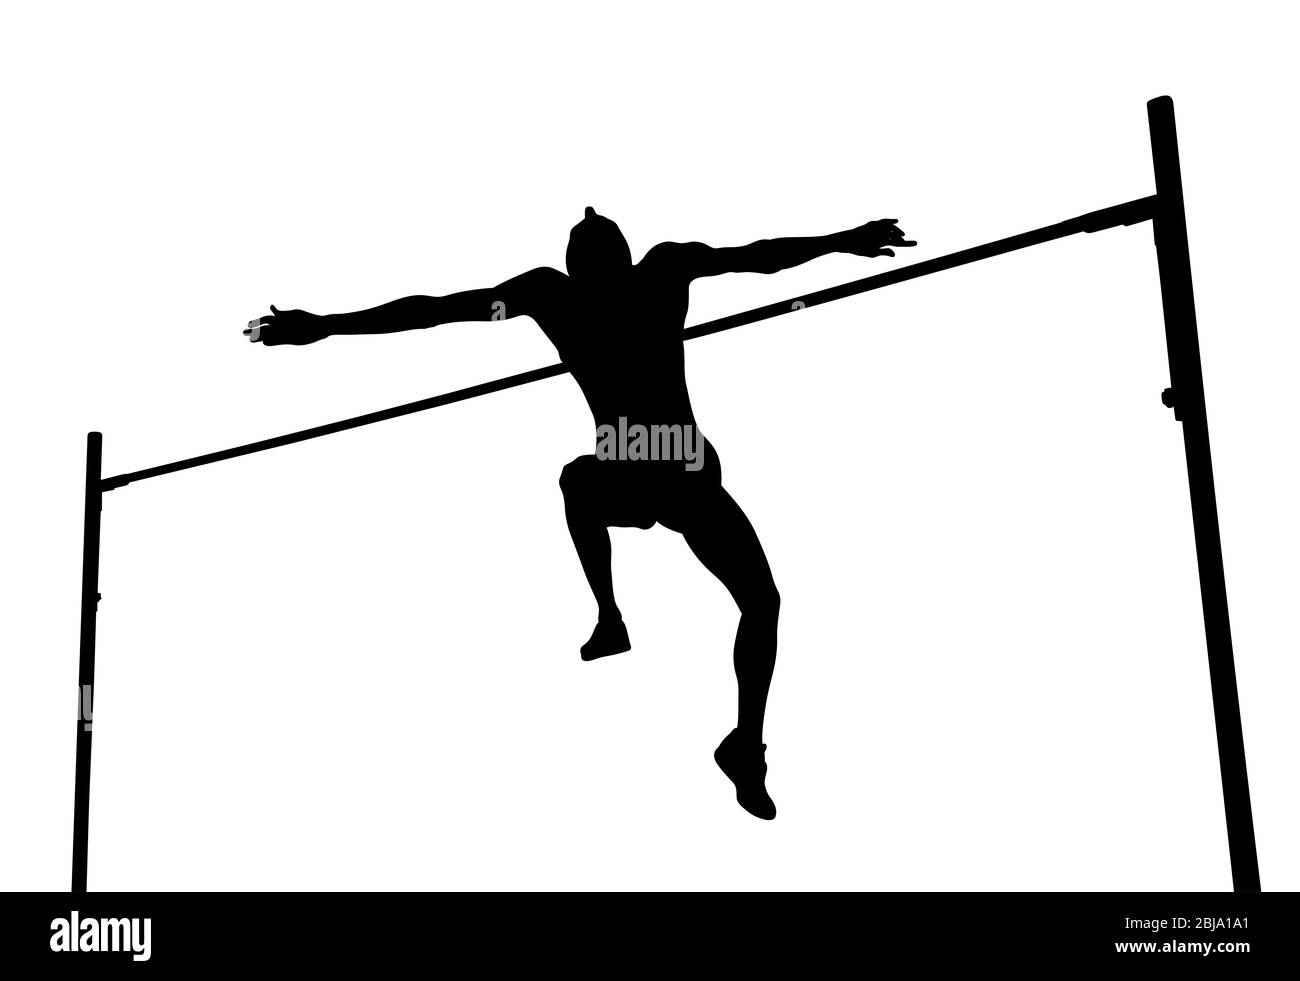 high jump man athlete jump black silhouette Stock Photo